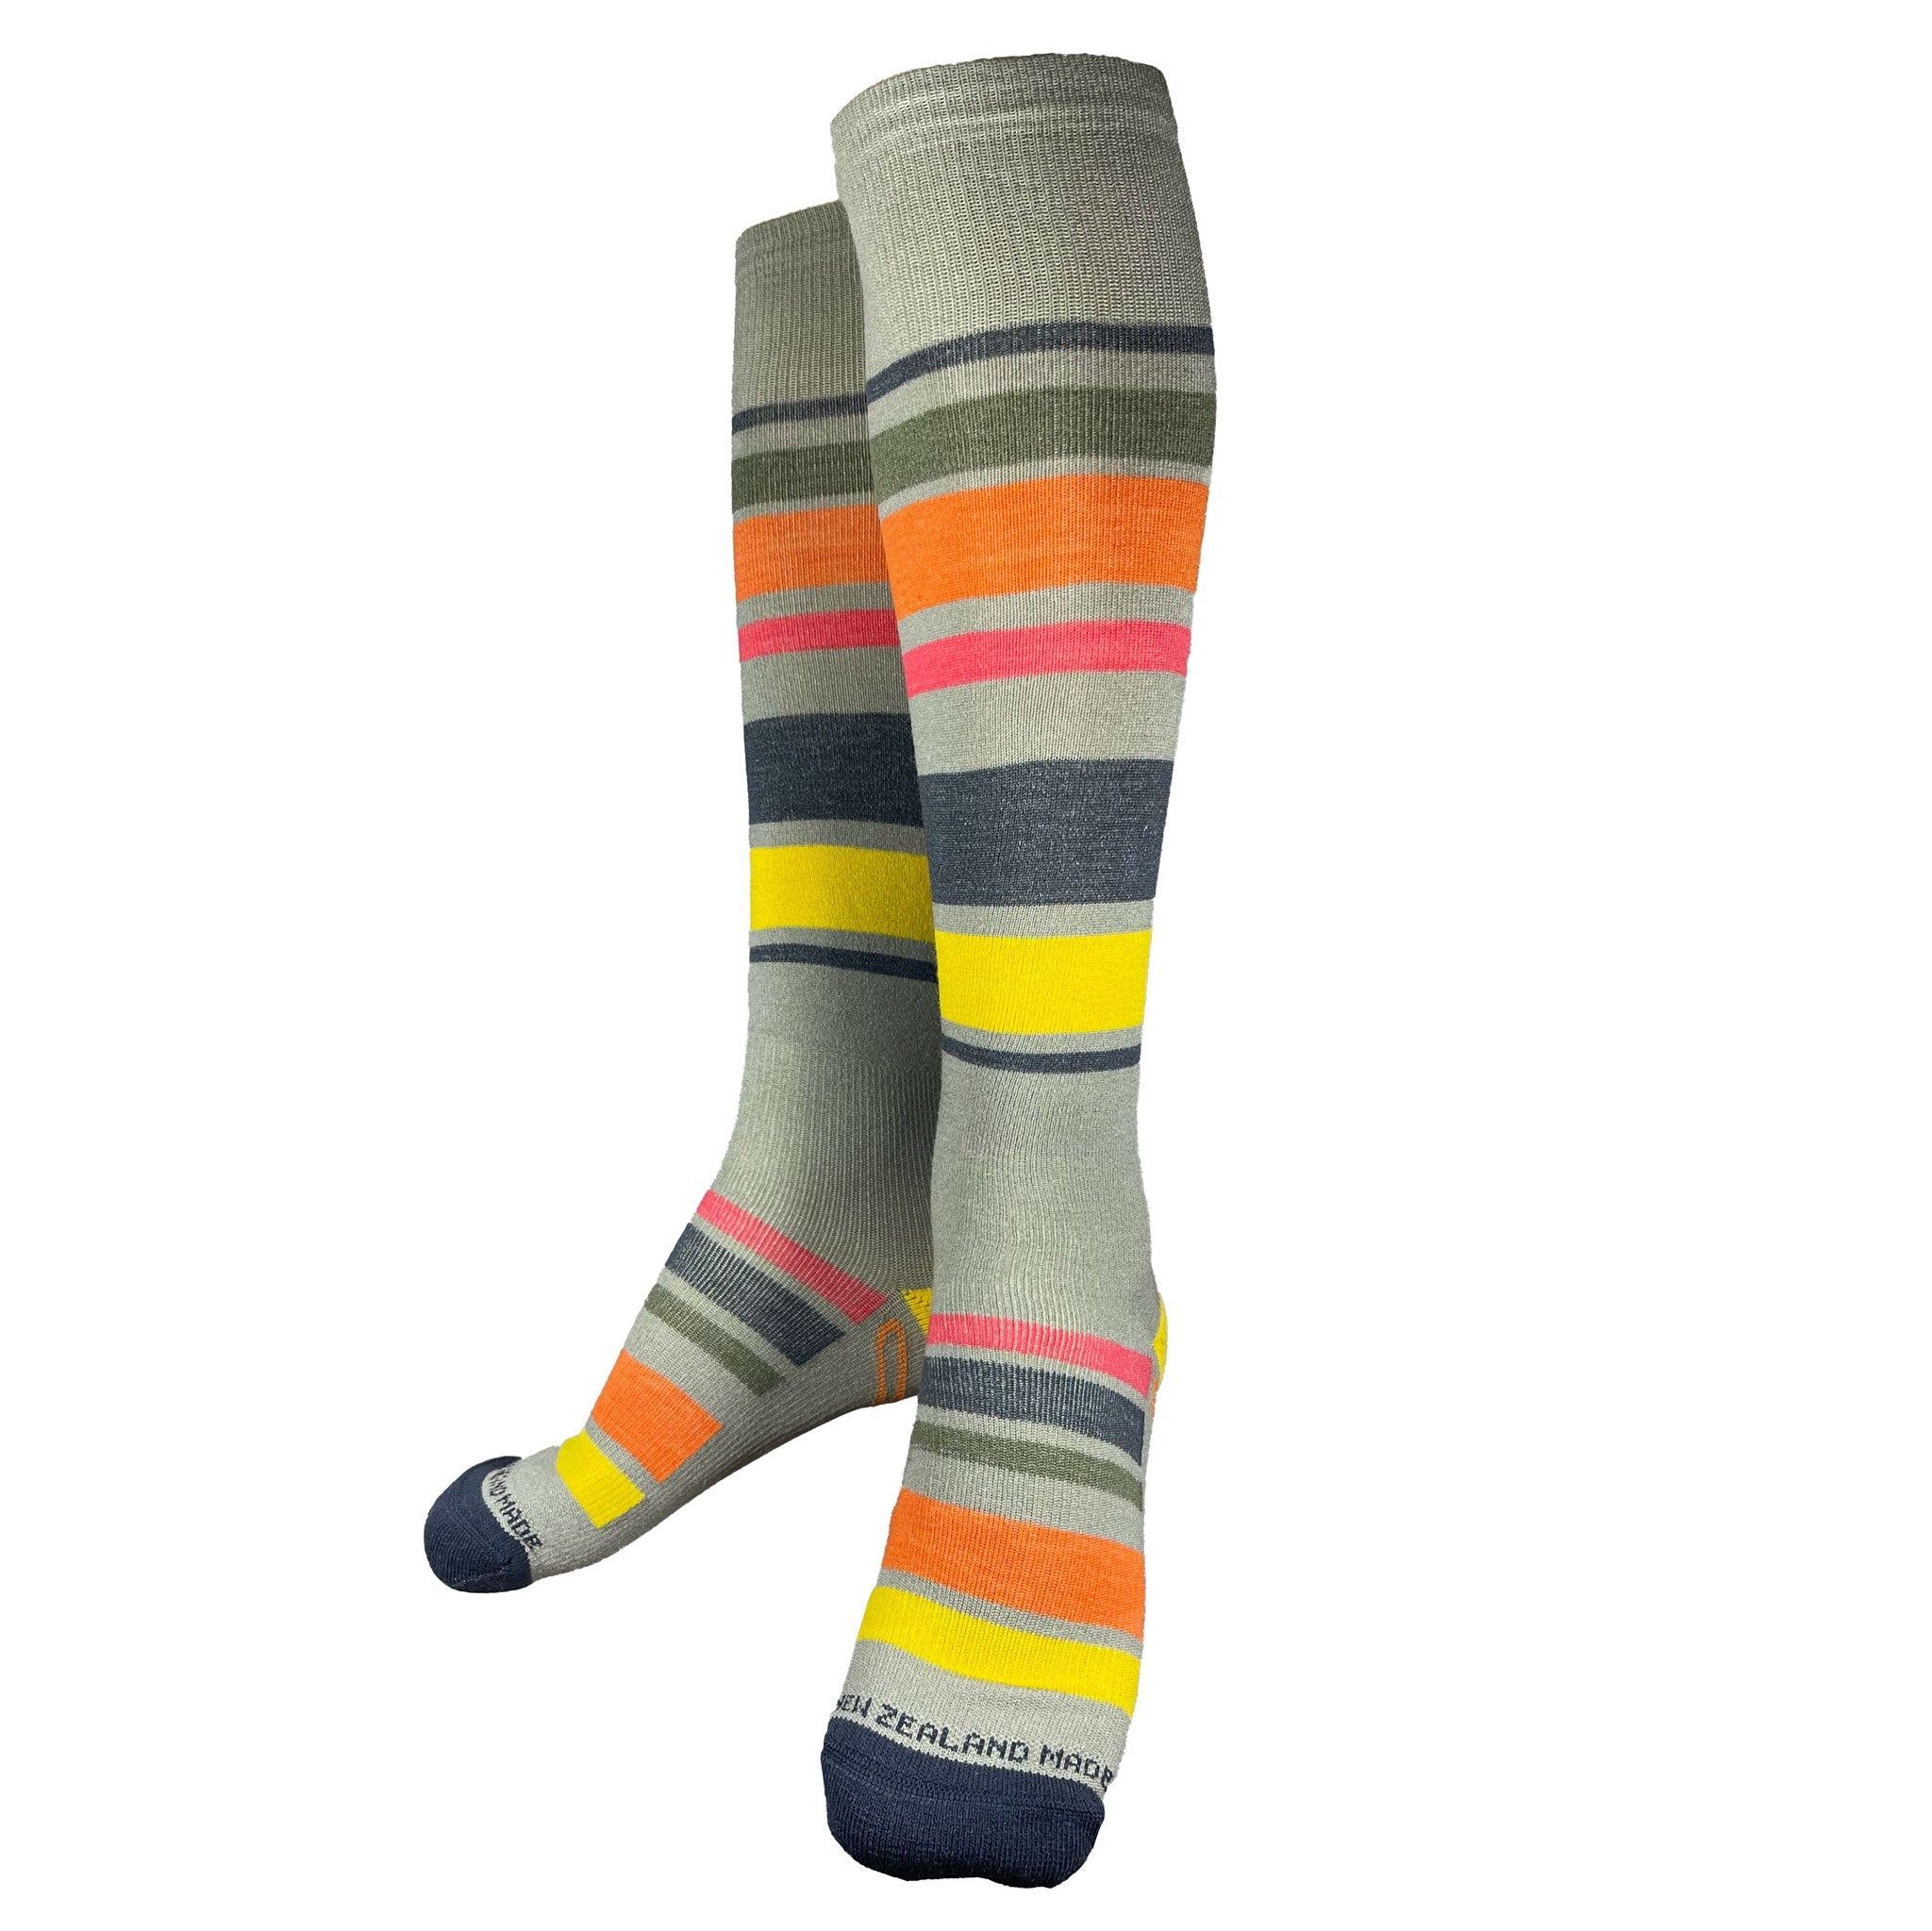 Yank Knee Sock | Brindle Stripe - Yank NZ